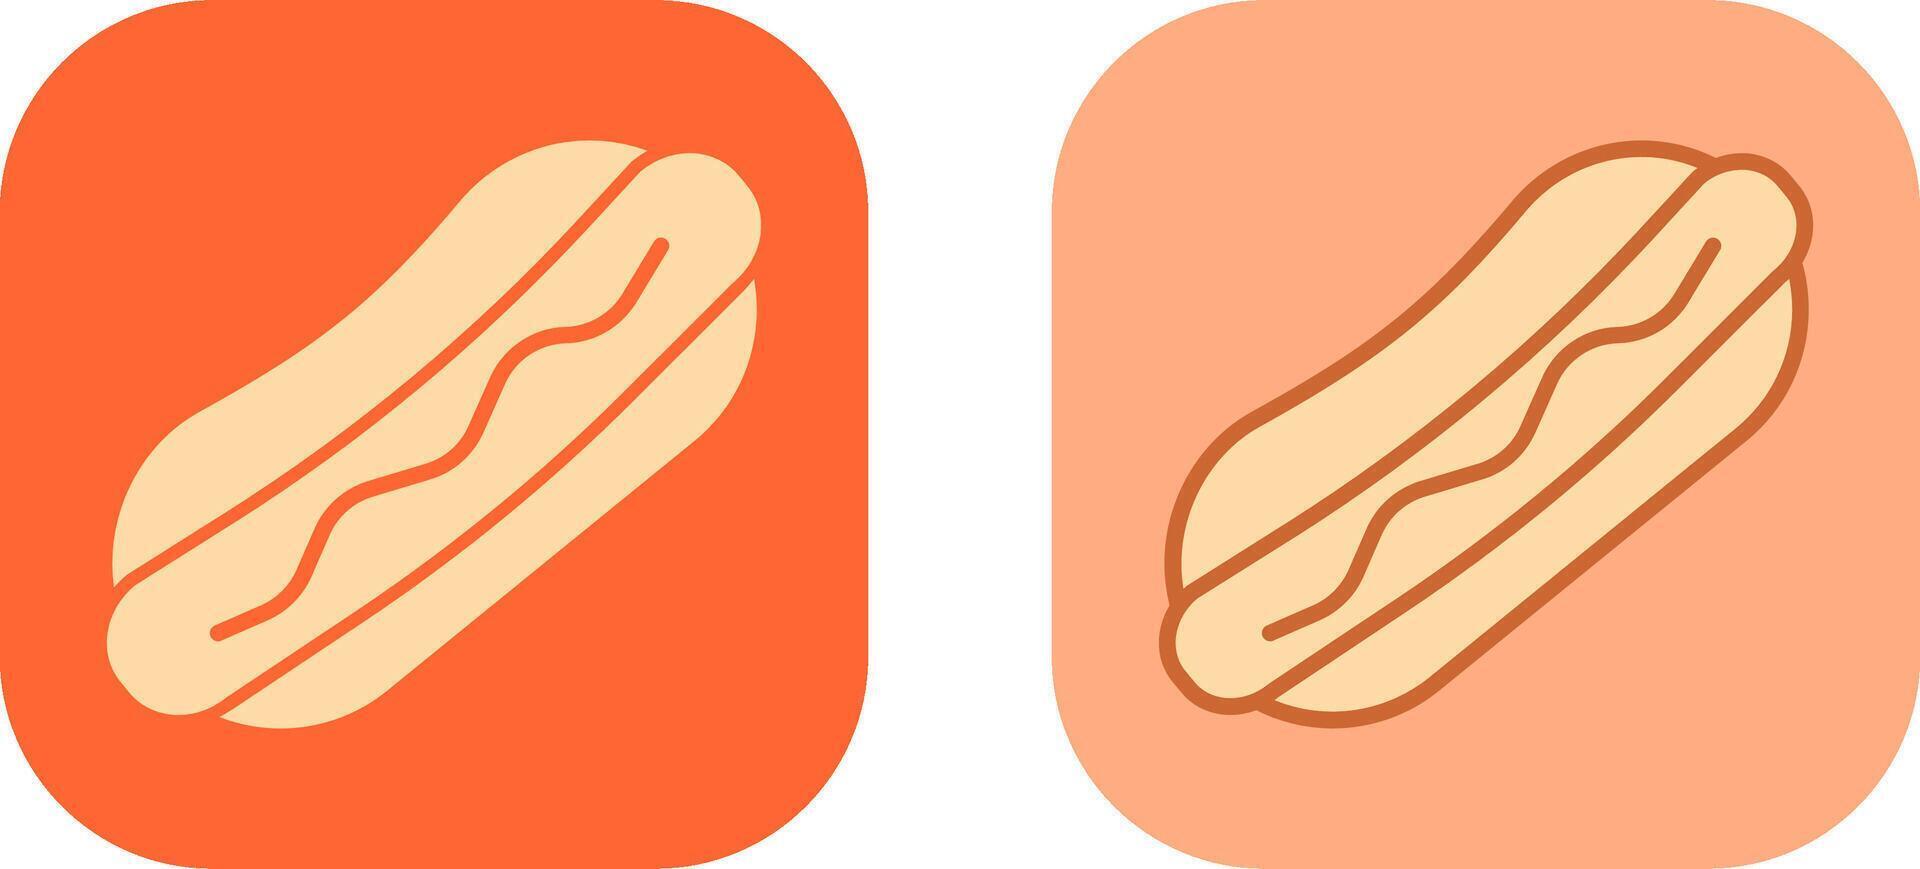 Hotdog Icon Design vector